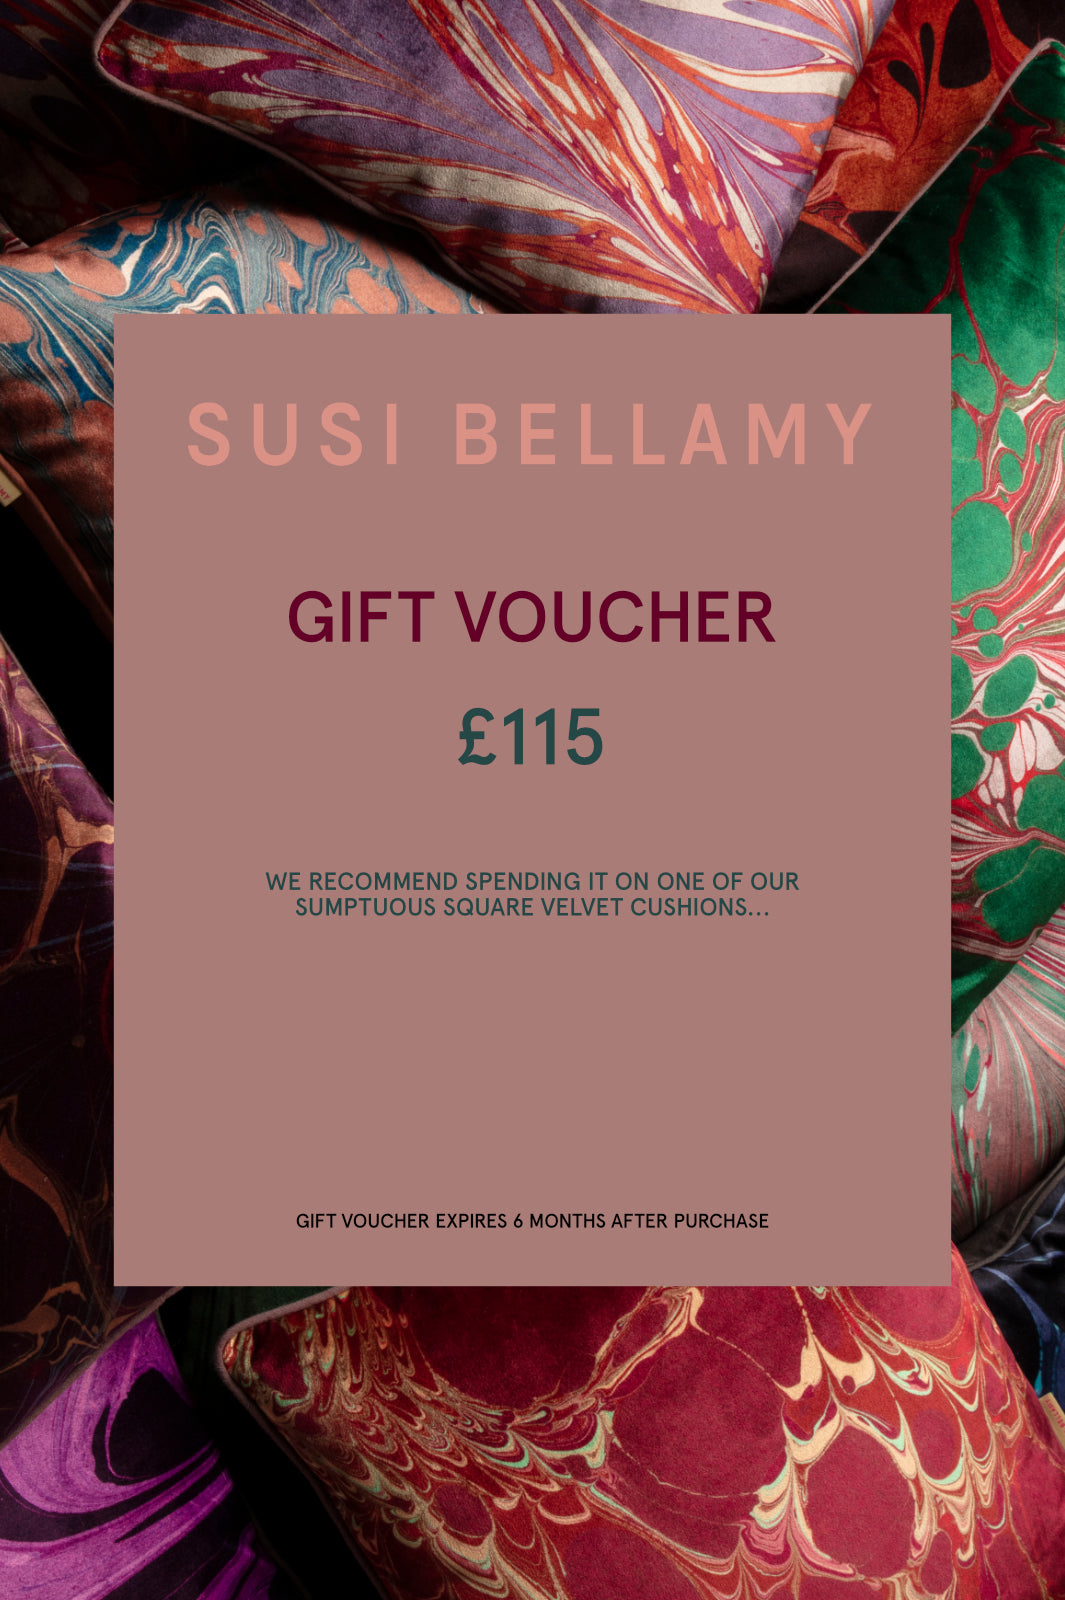 Susi Bellamy Gift Voucher for £115